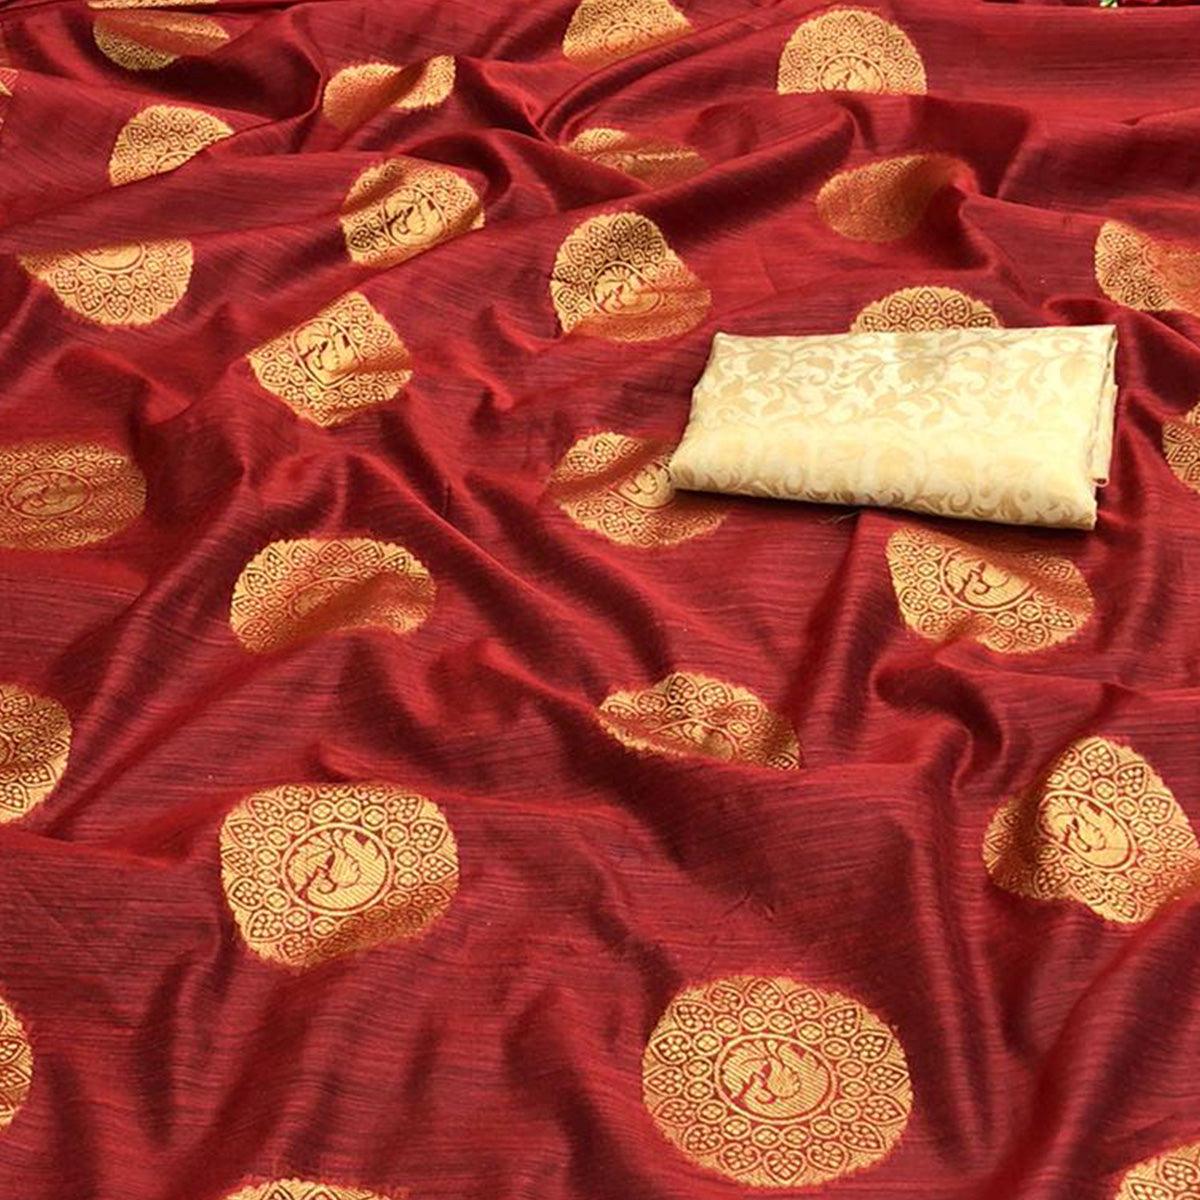 Engrossing Maroon Colored Festive Wear Woven Cotton Saree - Peachmode